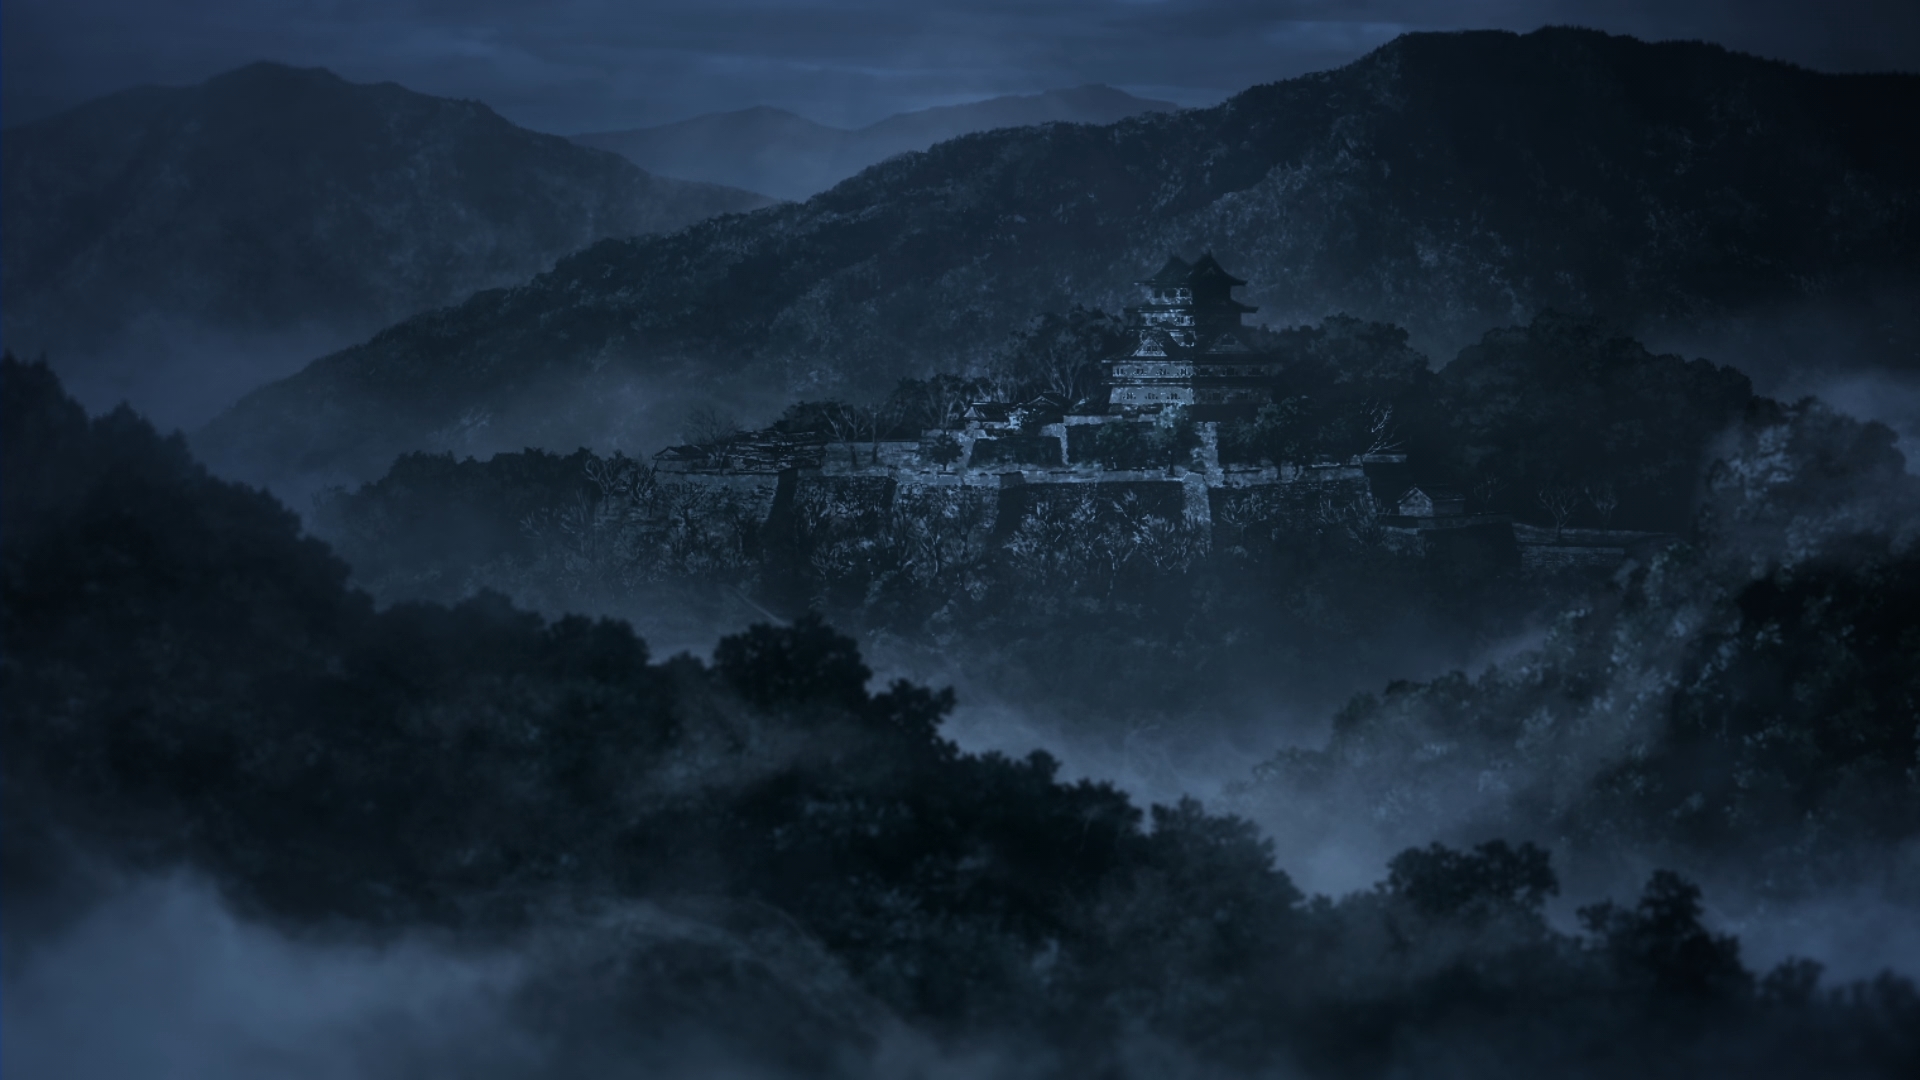 General 1920x1080 Kimetsu no Yaiba dark mist castle fog anime Anime screenshot forest night hills trees landscape